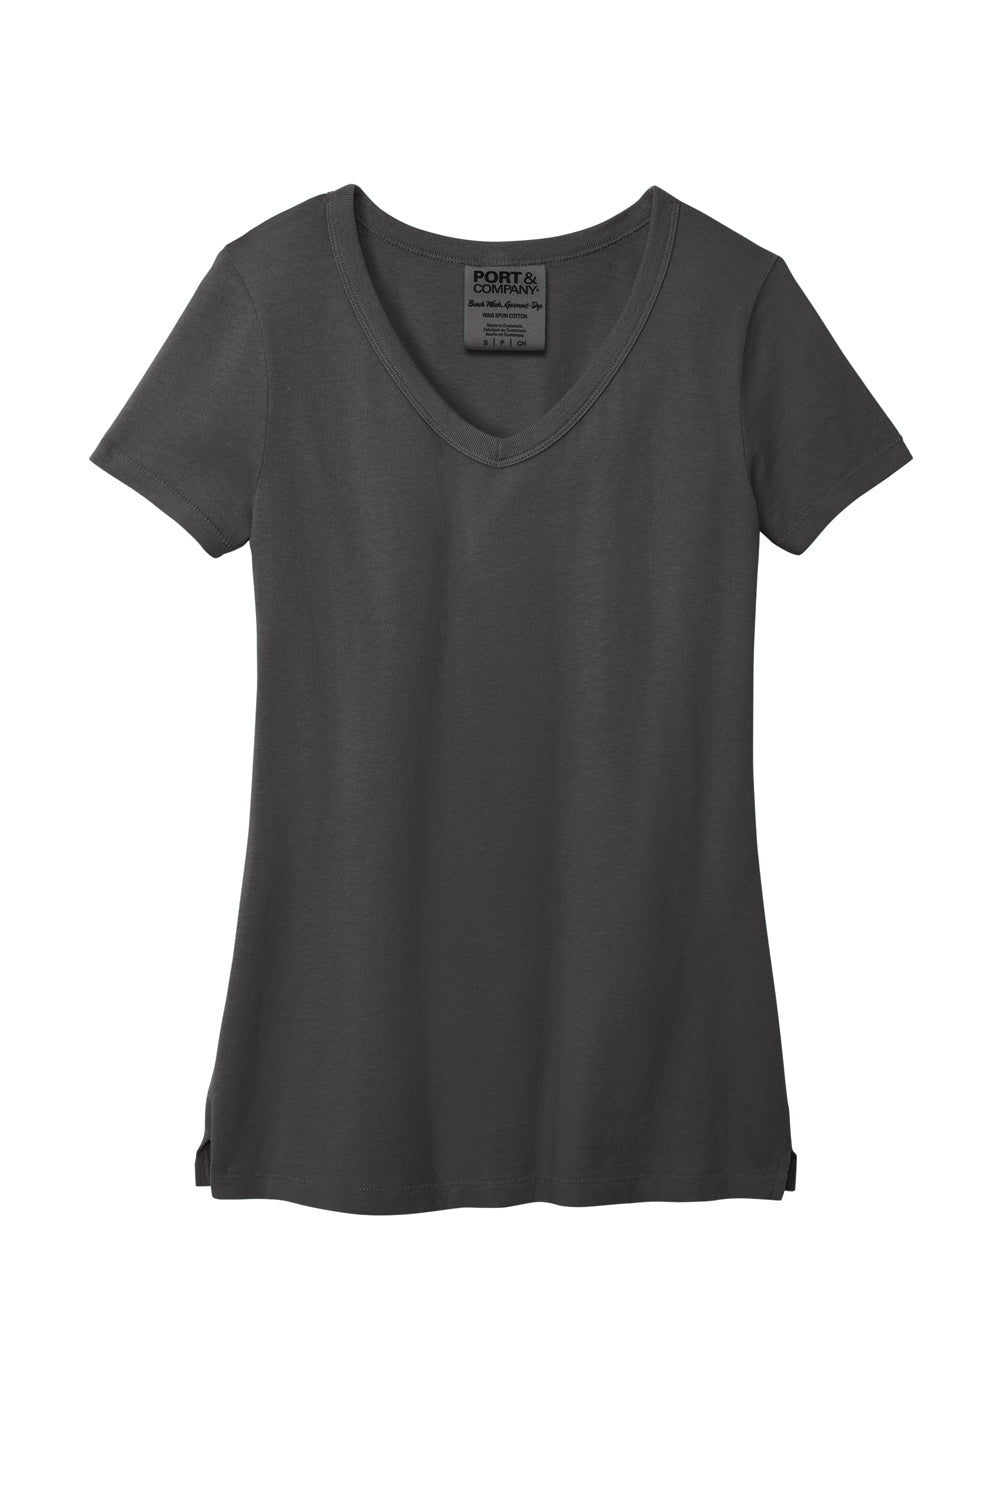 Port & Company LPC099V Womens Beach Wash Garment Dyed Short Sleeve V-Neck T-Shirt Coal Grey Flat Front